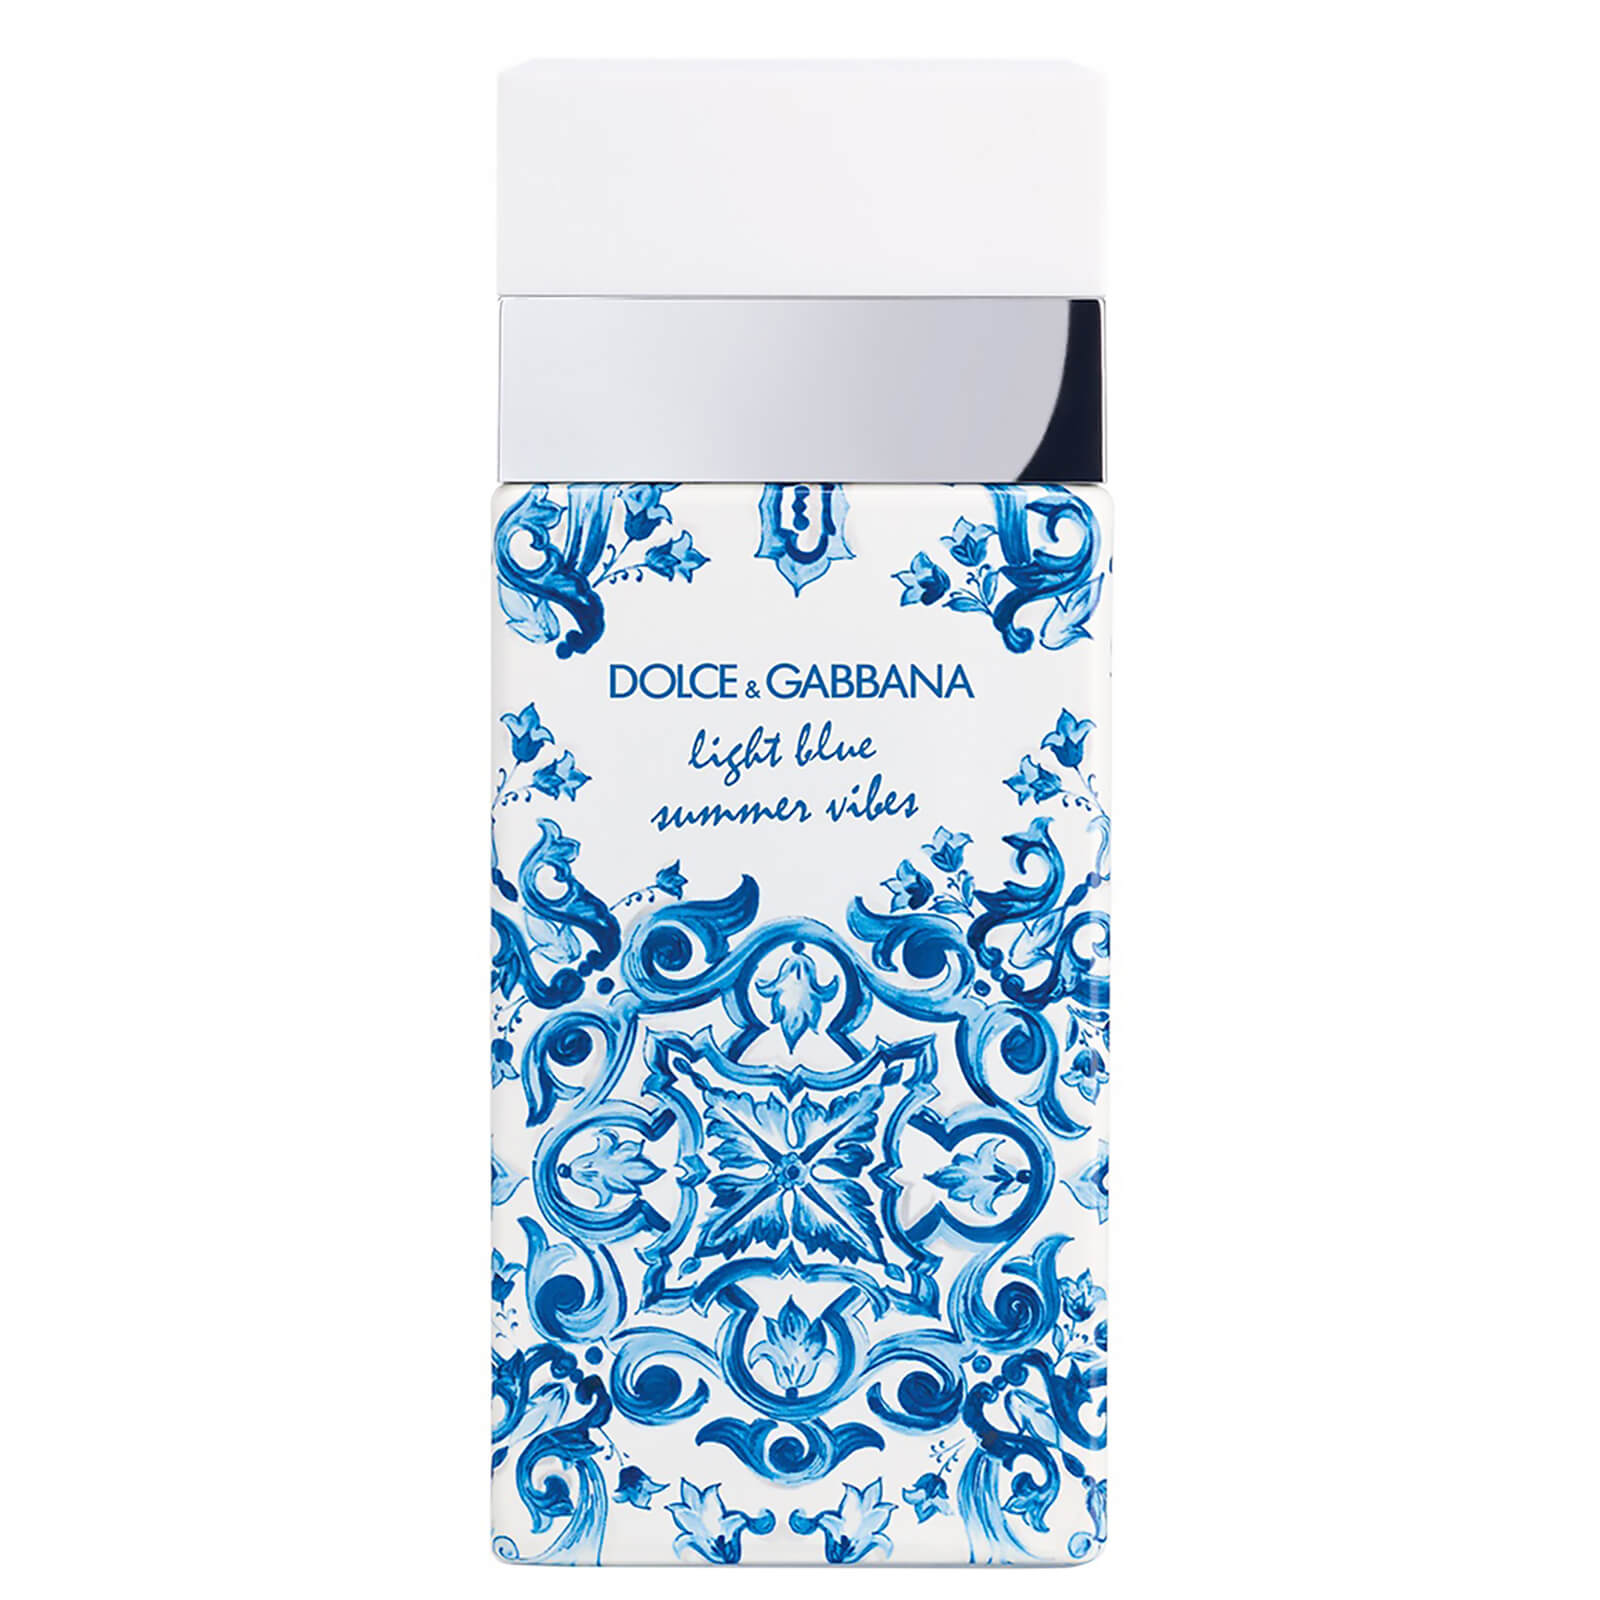 Dolce & Gabbana Light Blue Summer Vibes Limited Edition Eau de toilette spray 100 ml